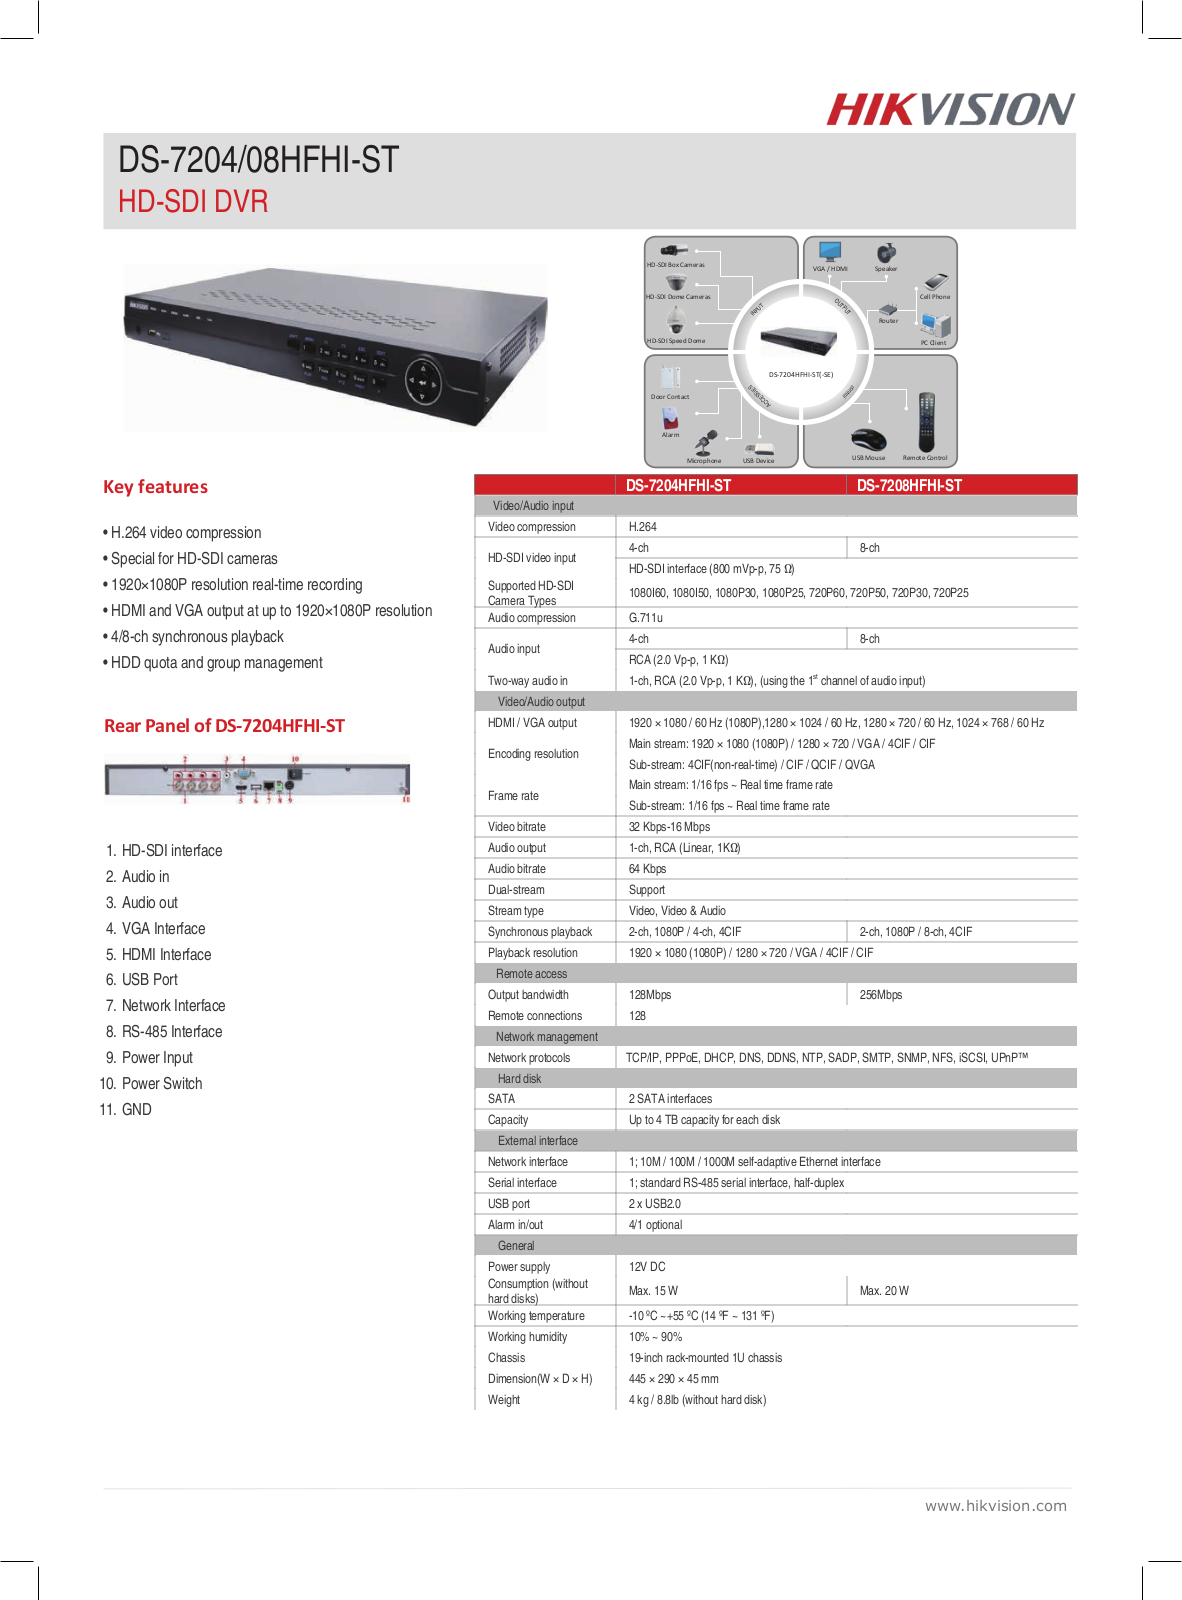 Hikvision DS-7208HFHI-ST Specsheet